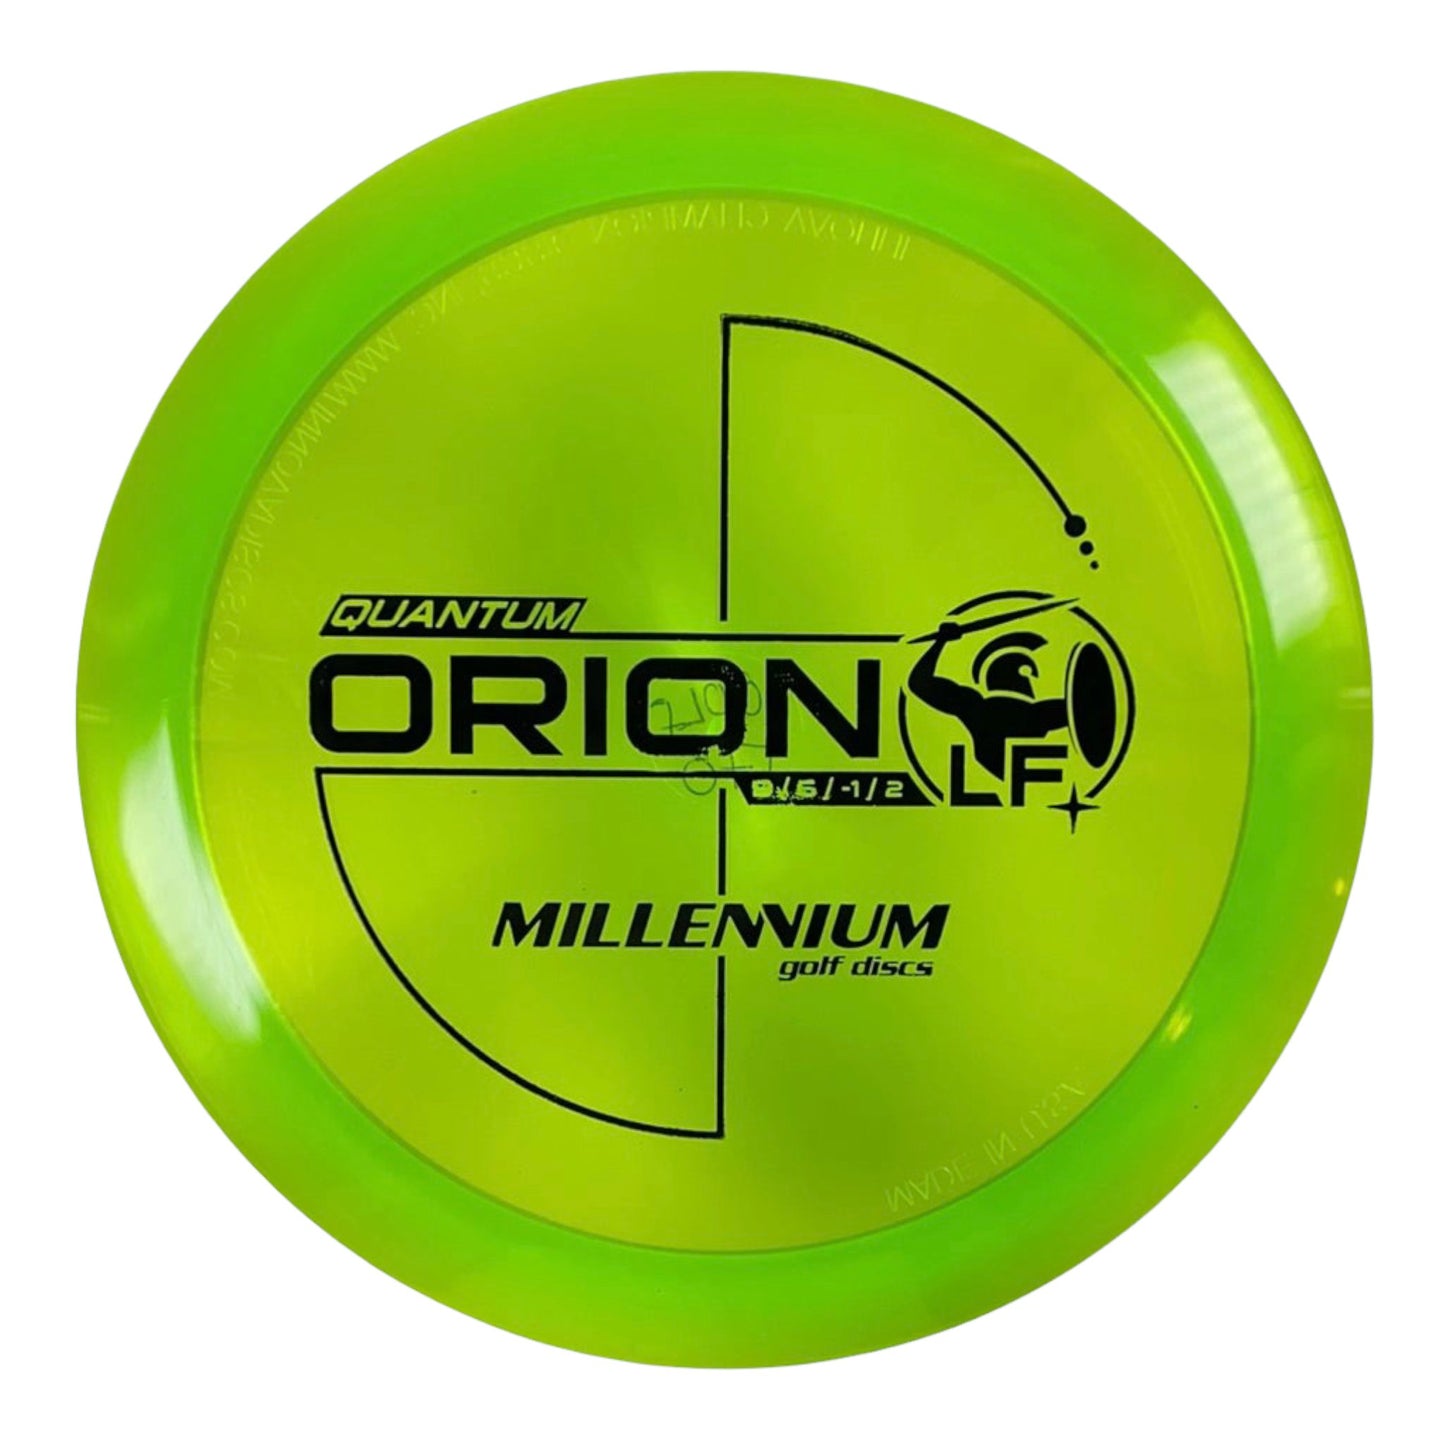 Millennium Golf Discs Orion LF | Quantum | Green/Black 170g Disc Golf